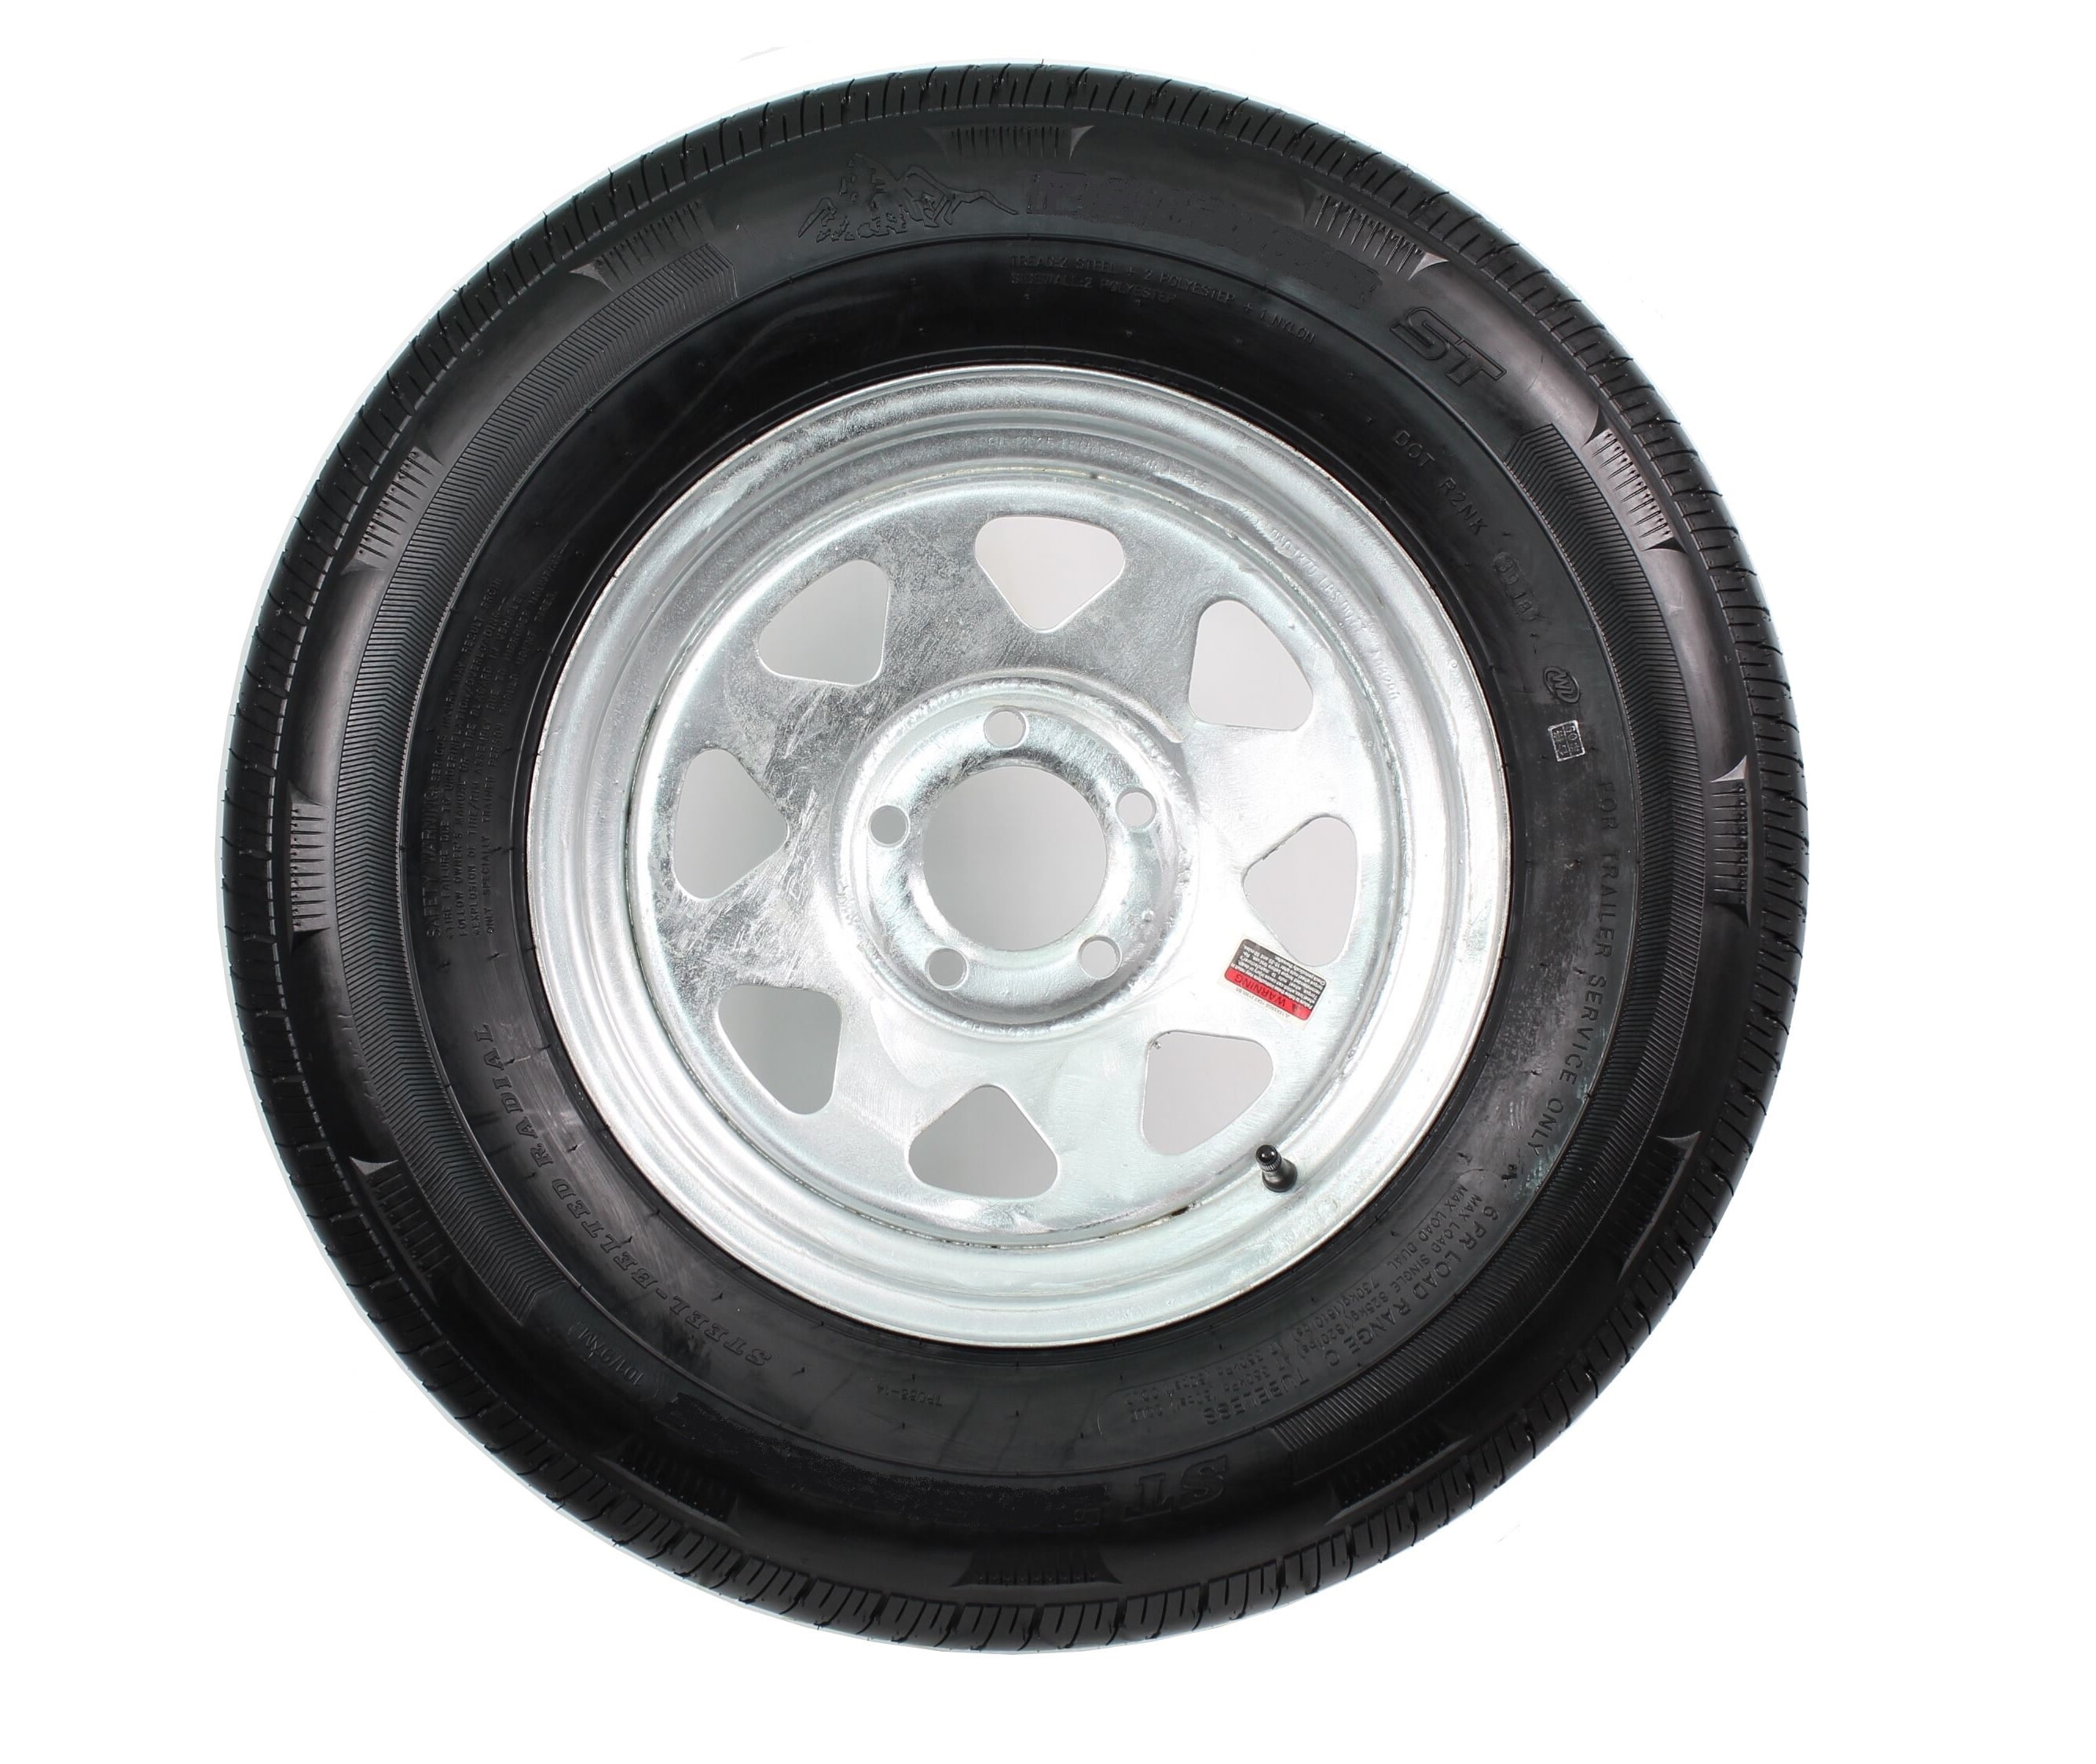 5x4.5 14" White Spoke Trailer Wheel with Bias ST205/75D14 Tire Mounted bolt 